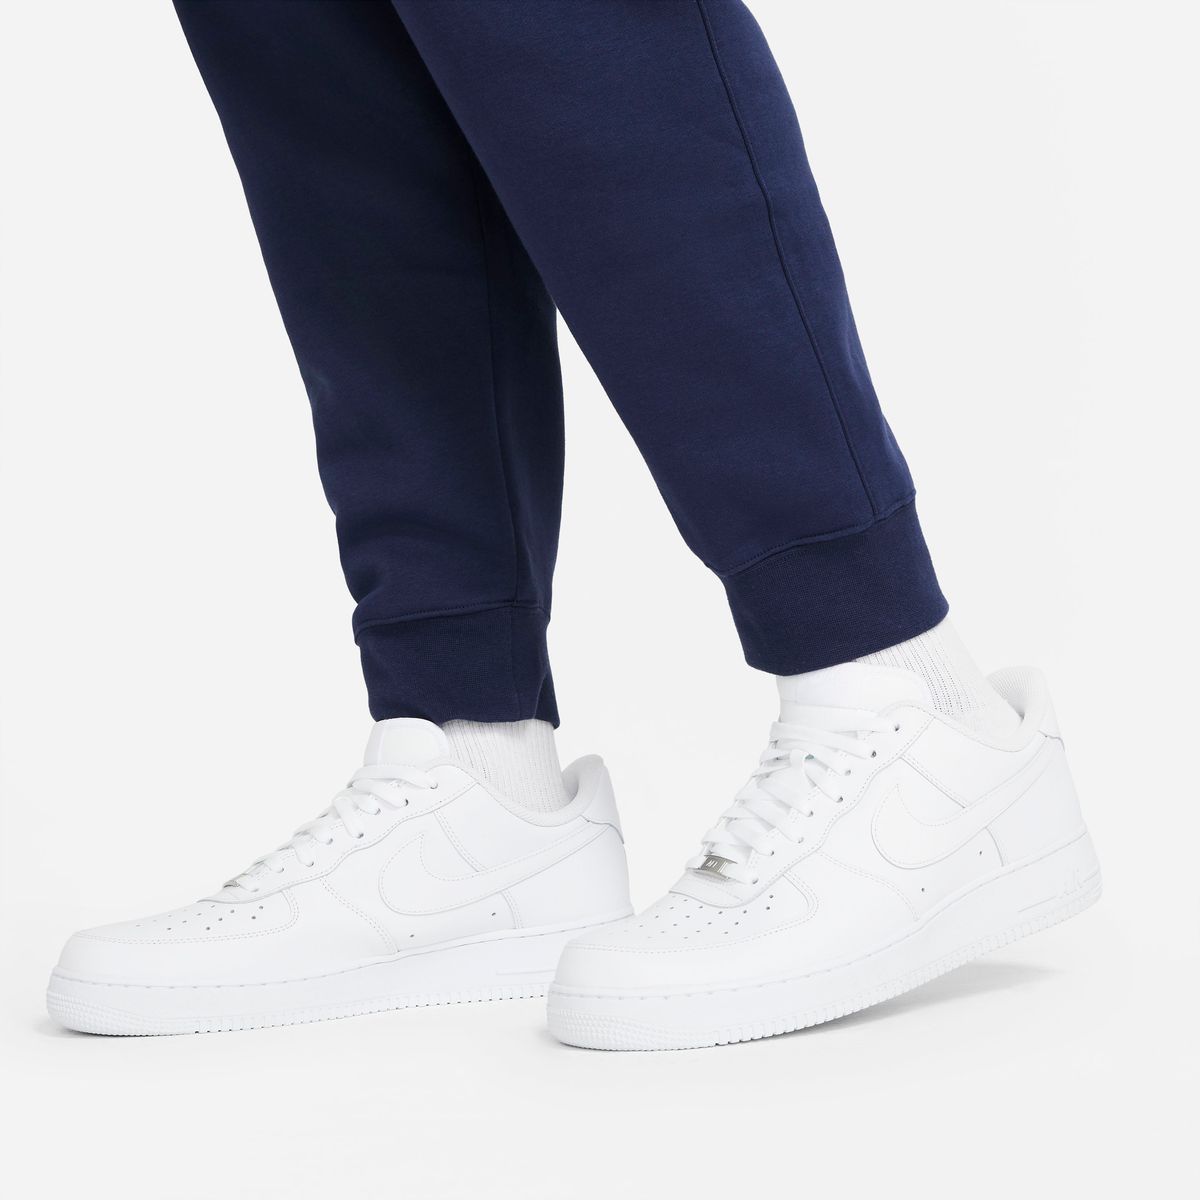 Pantalon Nike Sportswear Club Fleece  Azul